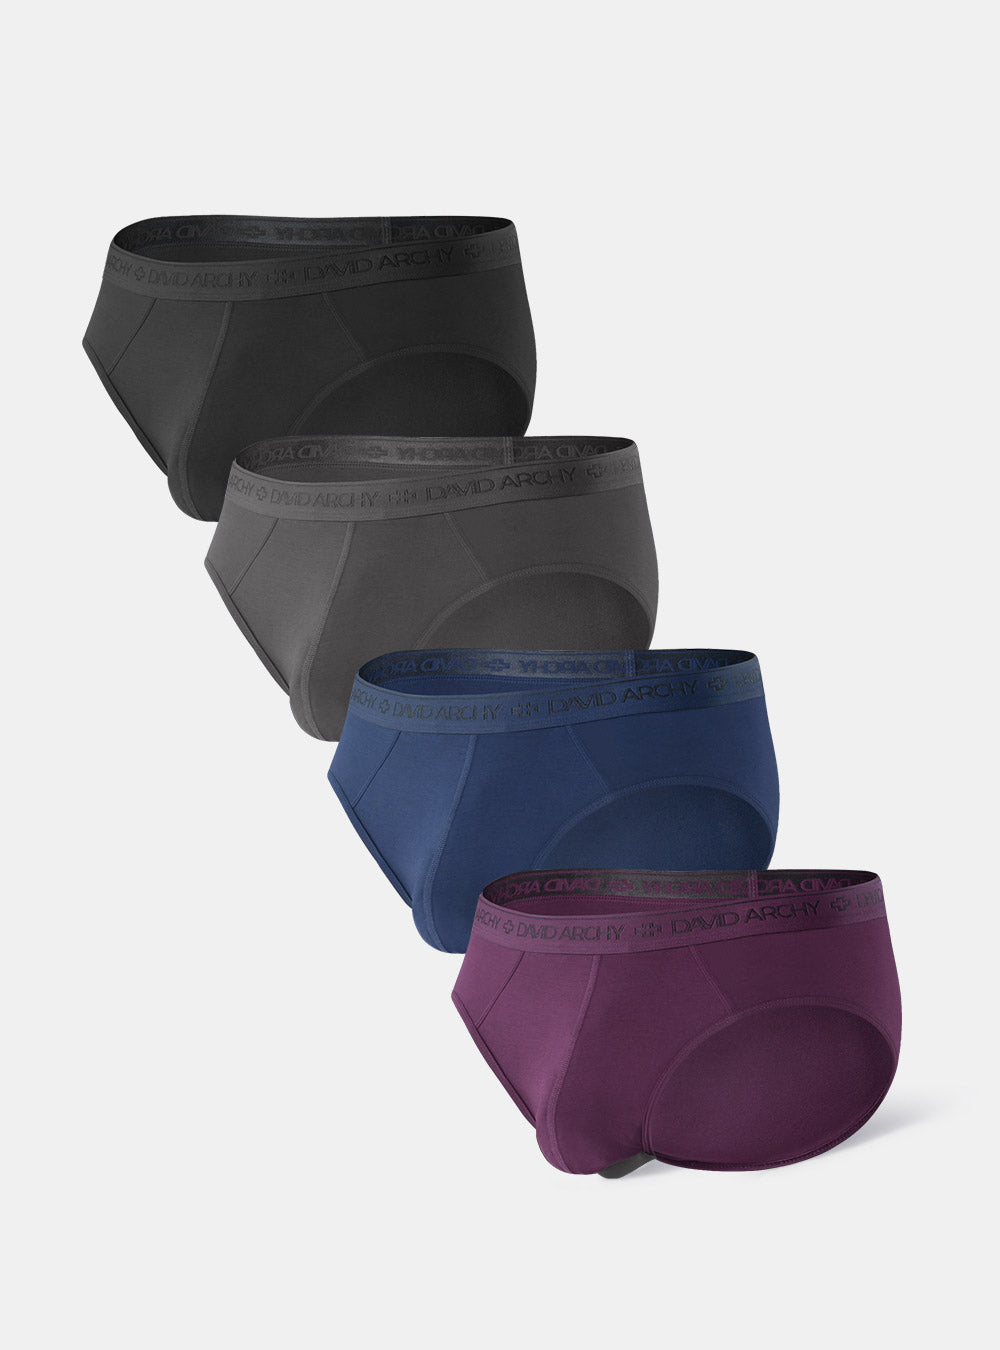 4 Packs Ultra Soft Trunks Micro Modal David Archy Comfortable Mens Underwear  Boxer